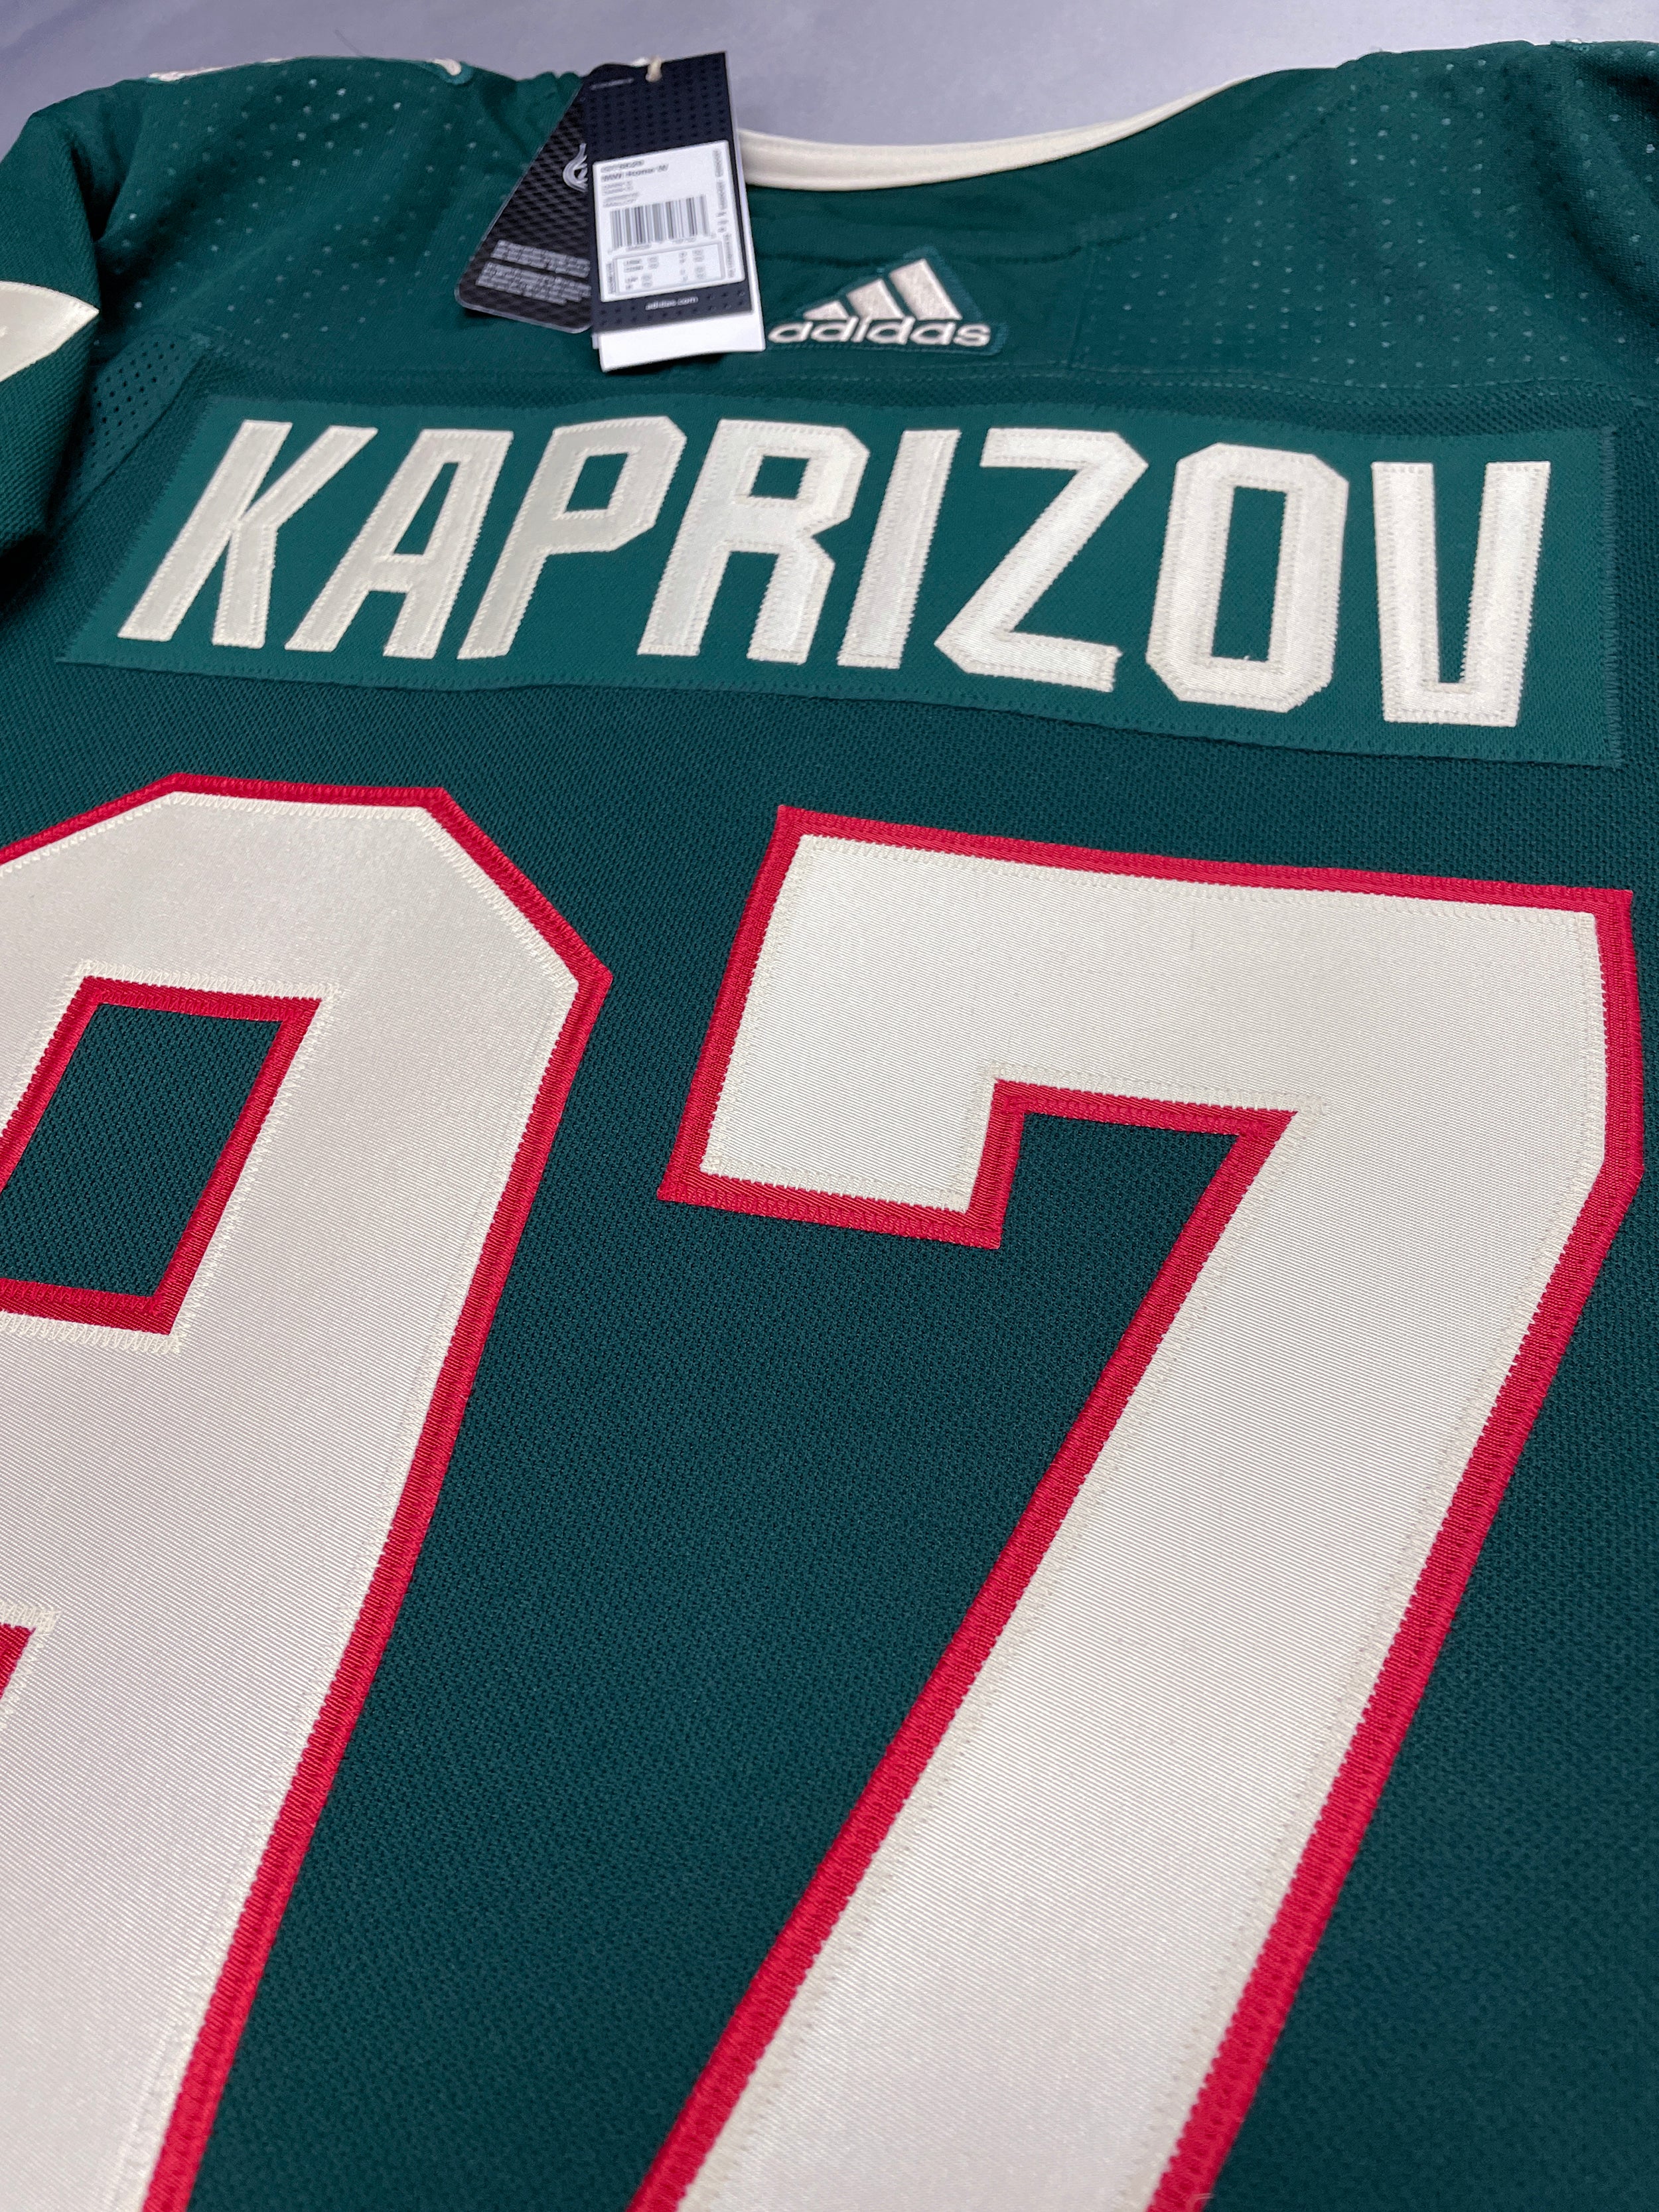 Kirill Kaprizov Minnesota Wild Fanatics Authentic Autographed adidas Green  Authentic Jersey with 20th Anniversary Season Patch